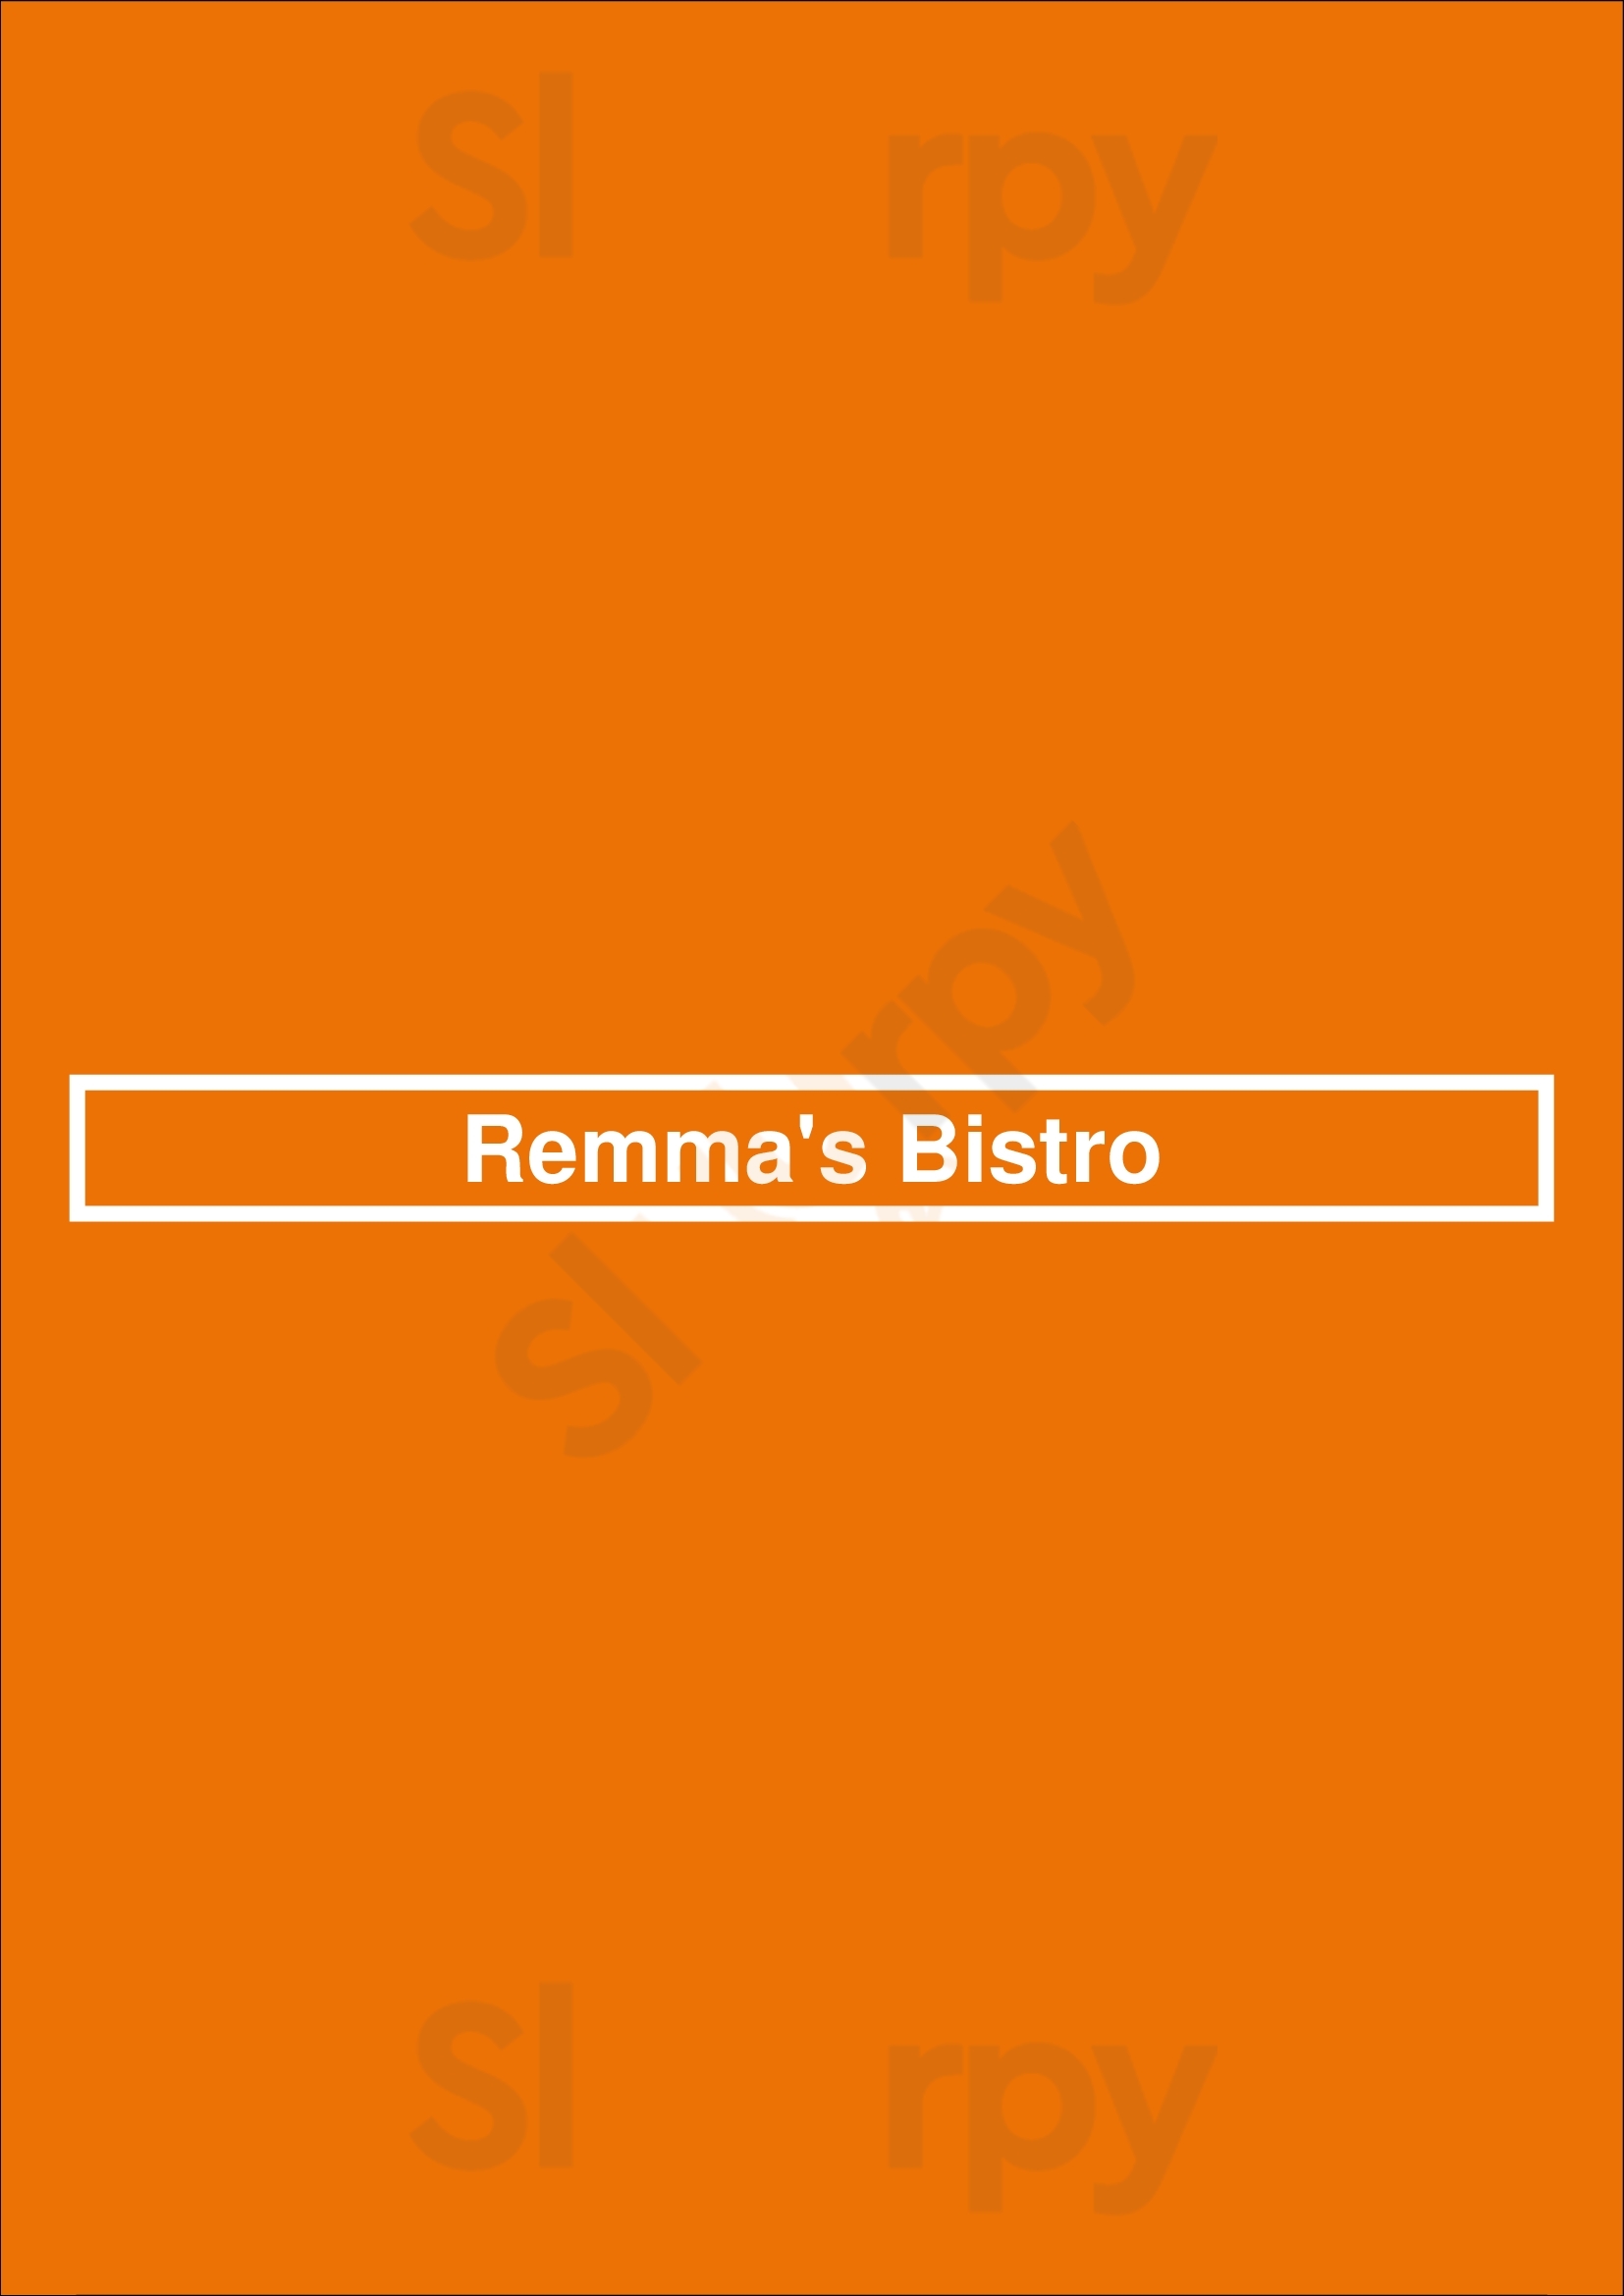 Remma's Bistro Budapest Menu - 1